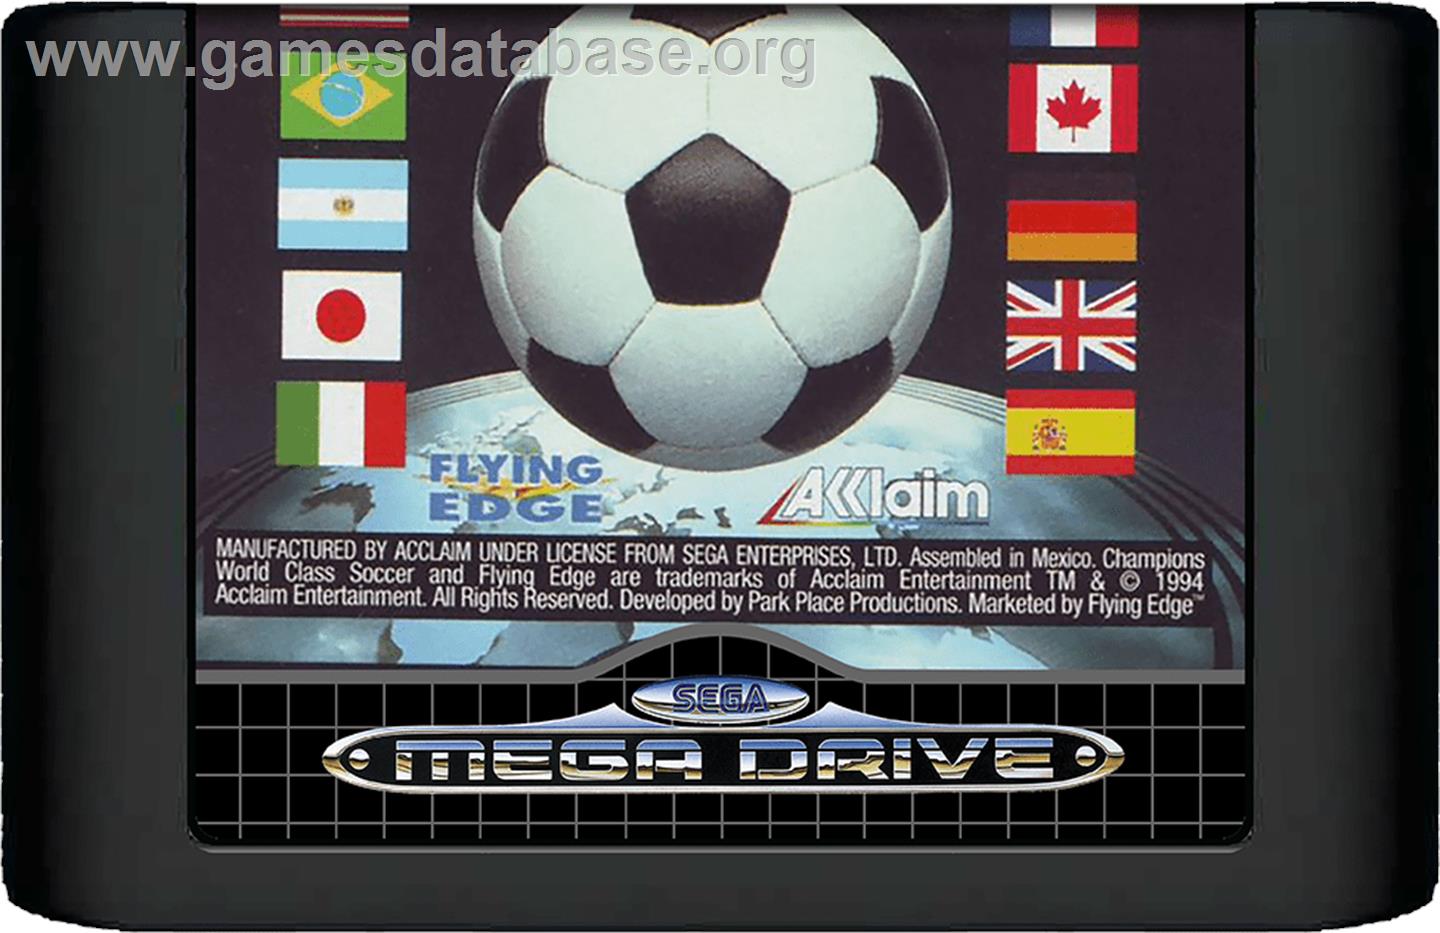 Champions World Class Soccer - Sega Genesis - Artwork - Cartridge